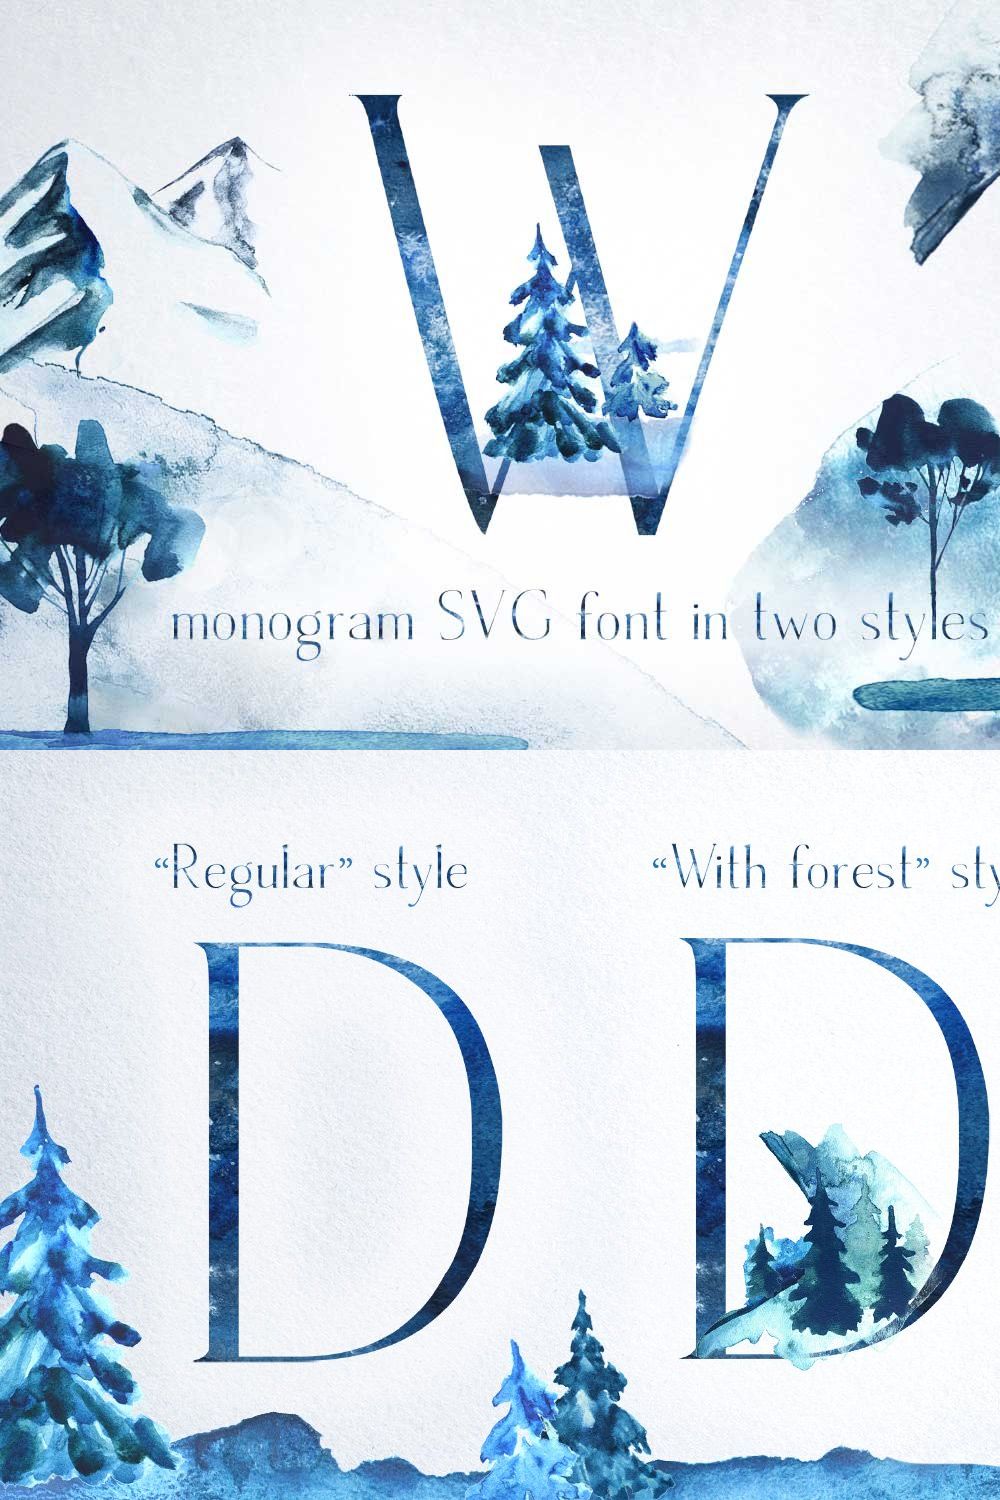 Winter fairytale - SVG font pinterest preview image.